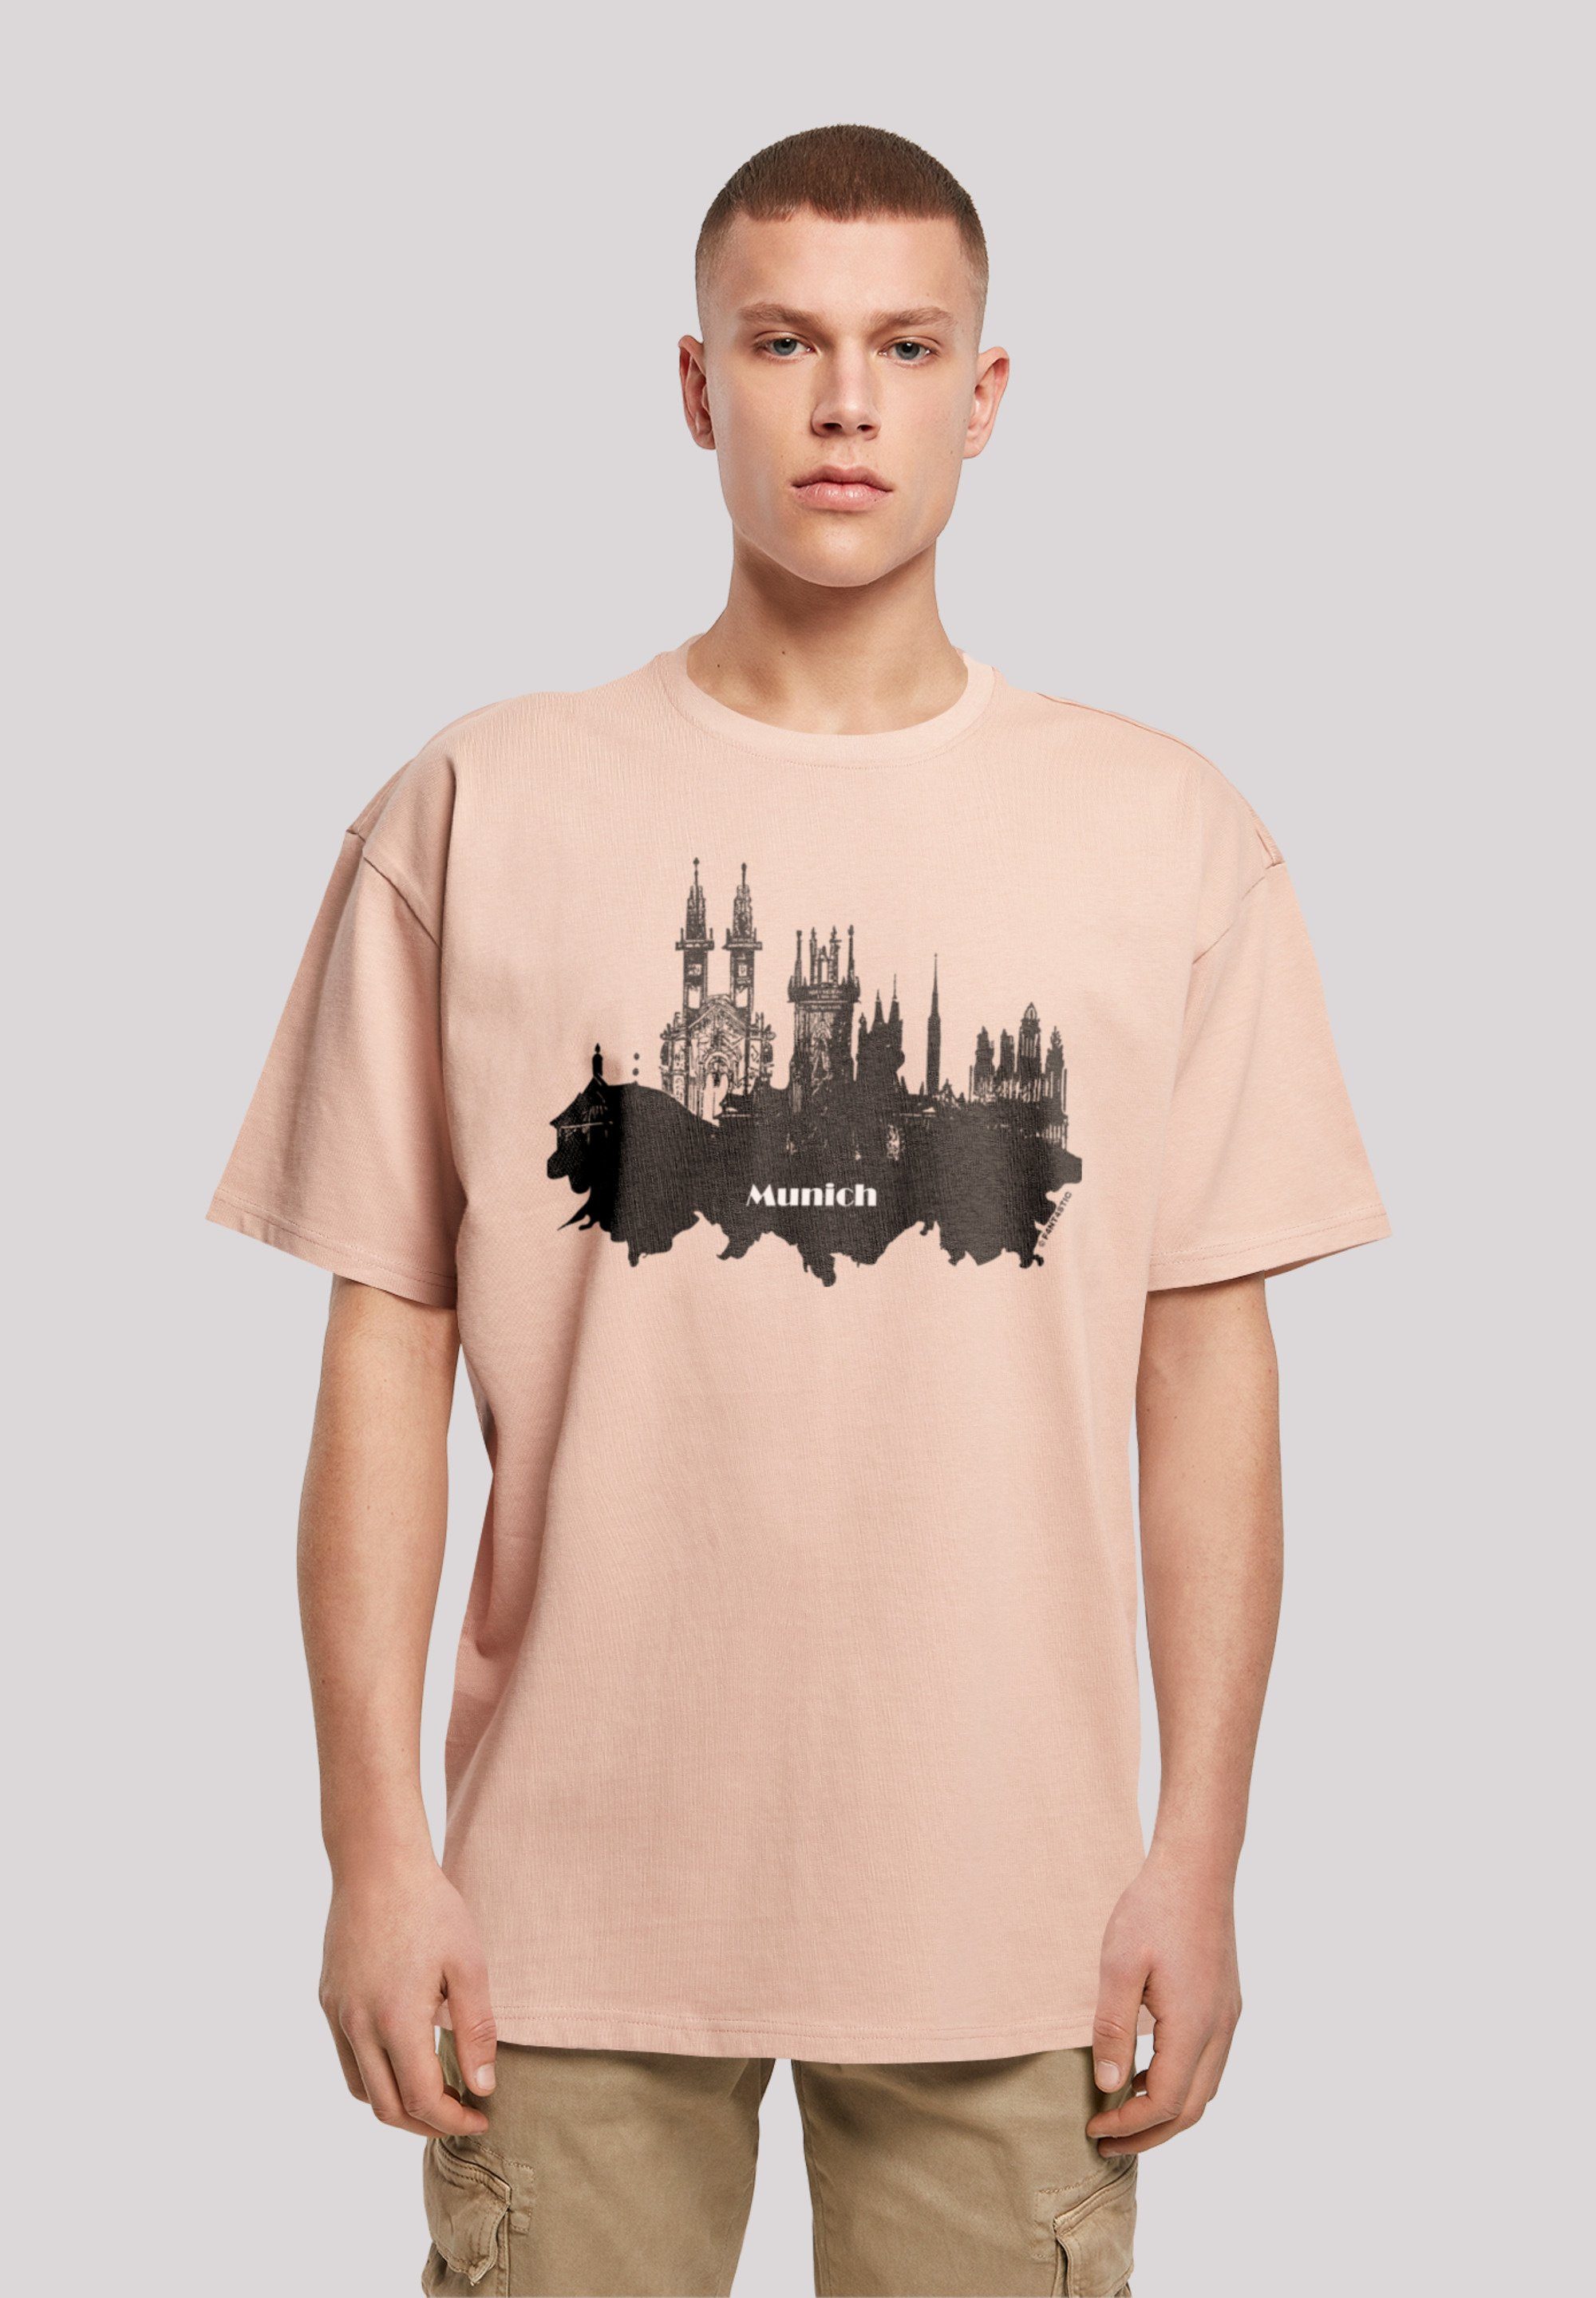 F4NT4STIC T-Shirt Cities Collection - Munich skyline Print amber